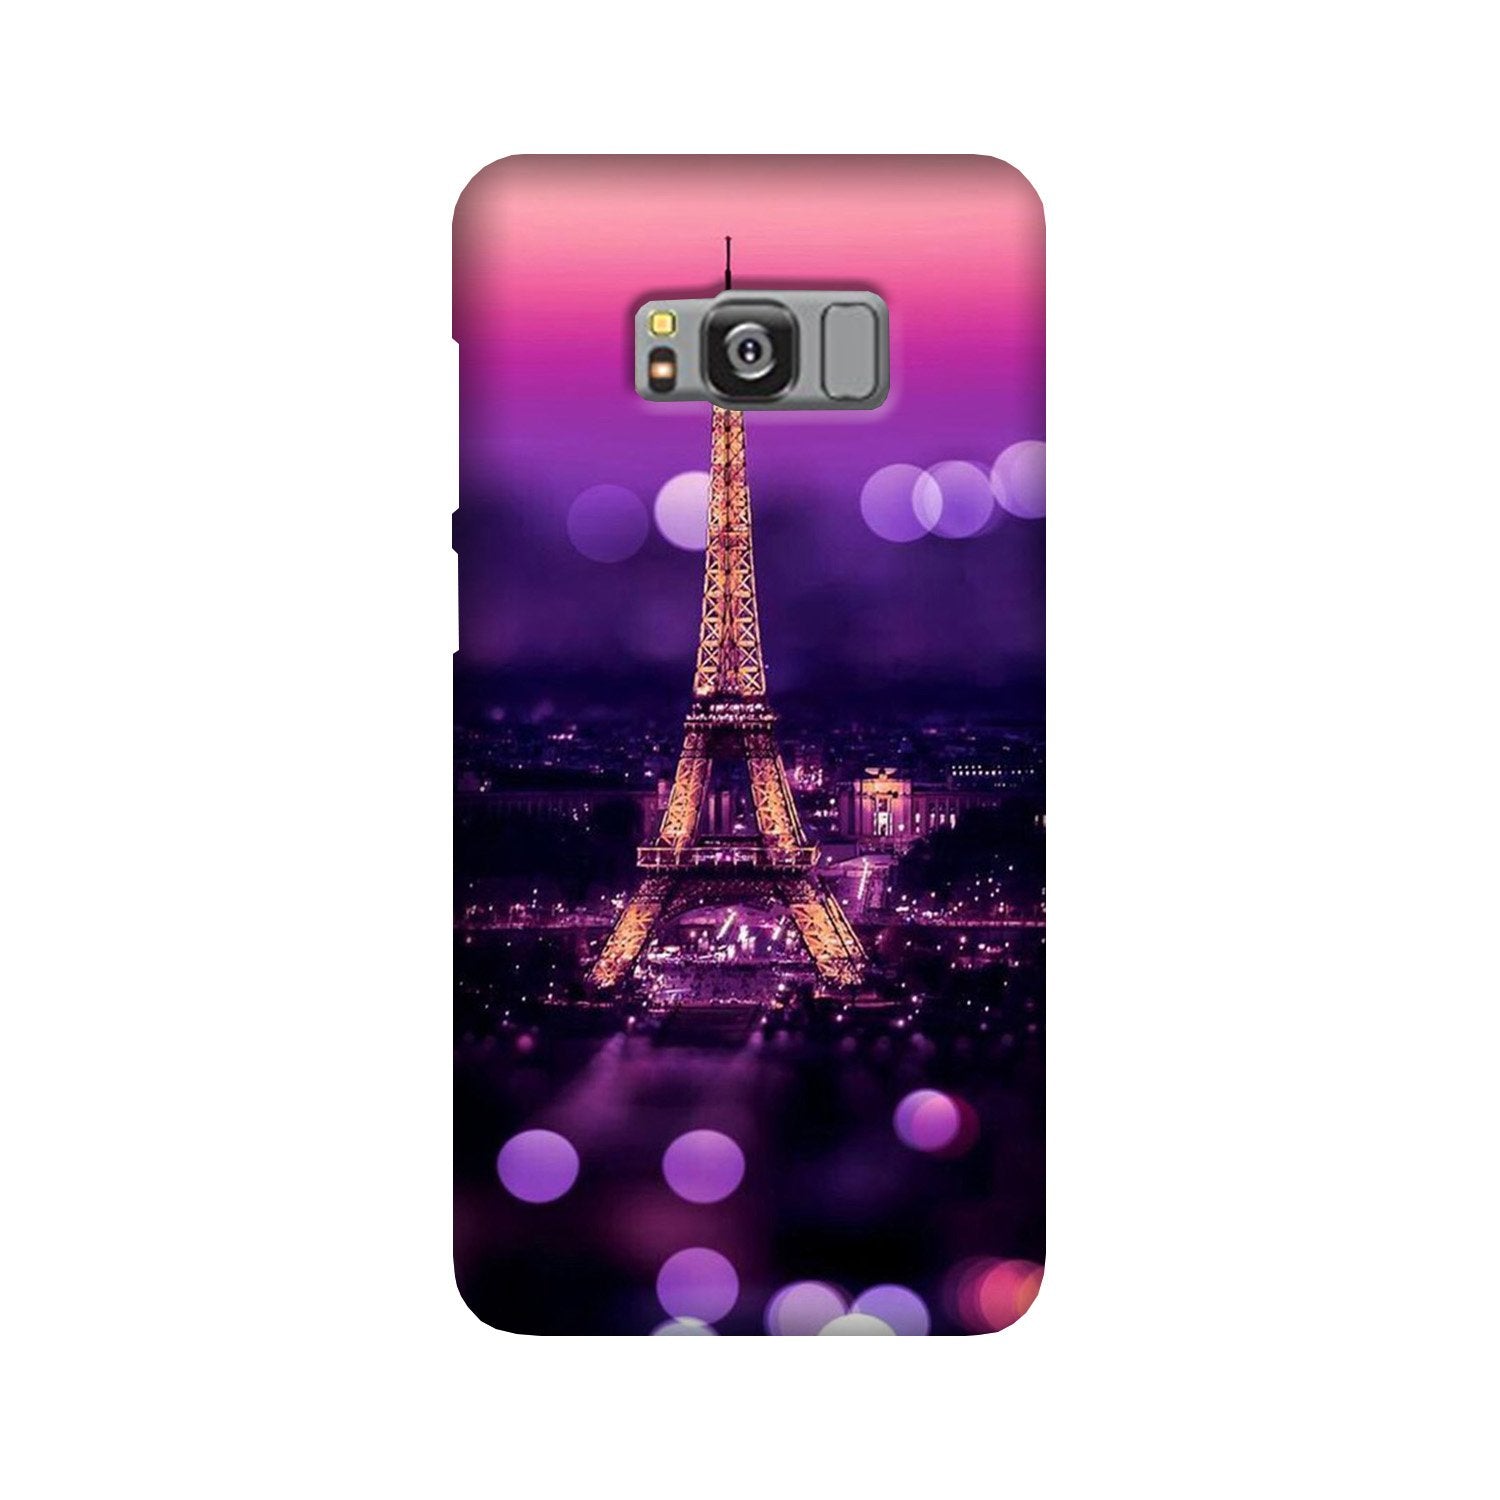 Eiffel Tower Case for Galaxy S8 Plus